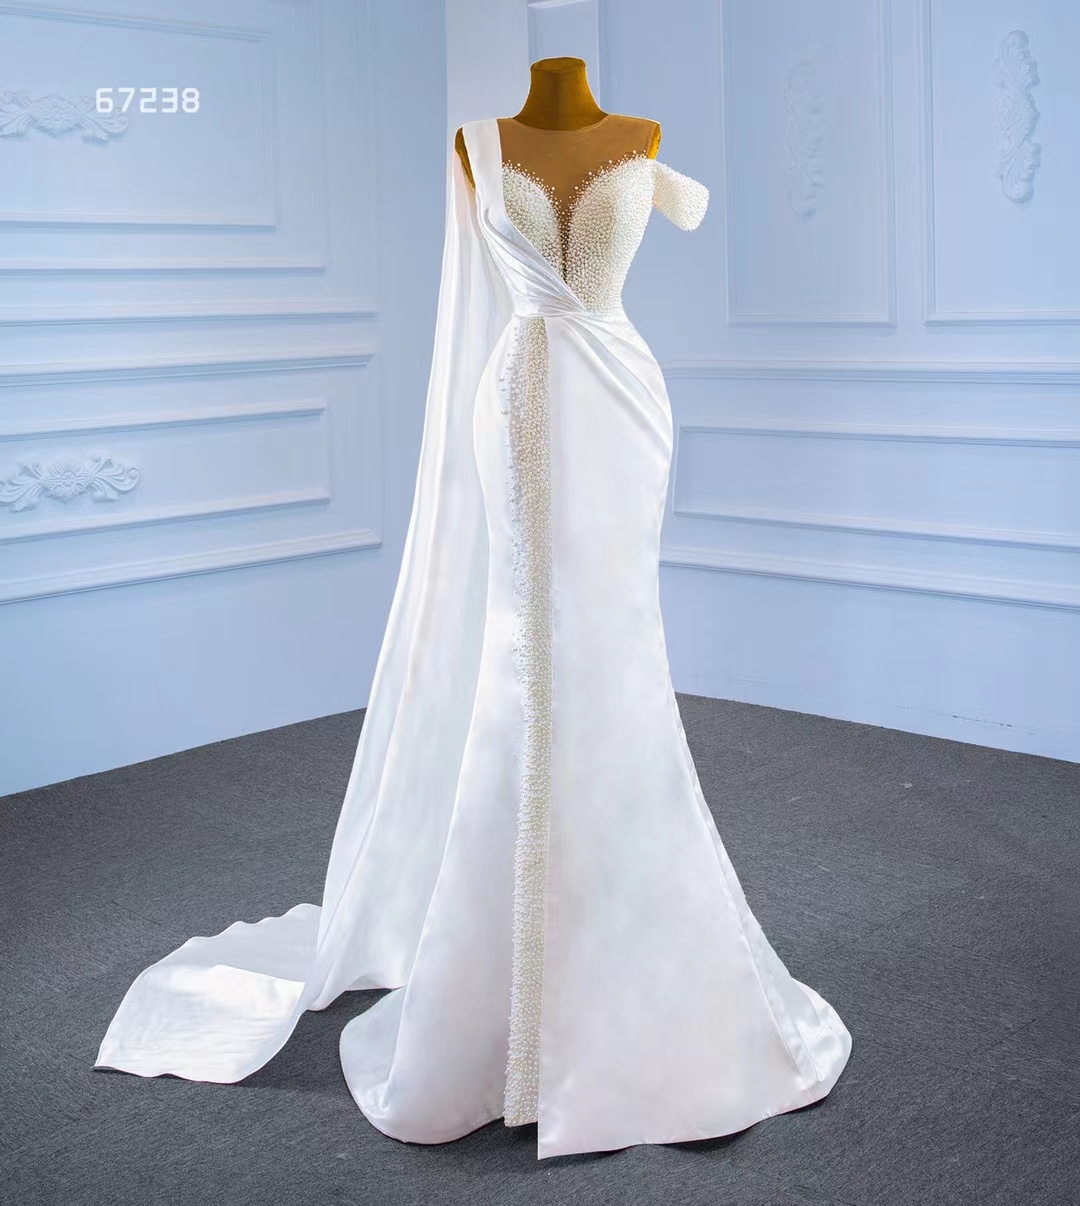 Luxury Wedding Dress Pearls One Shoulder Mermaid Tail Bridal Gown SM67238